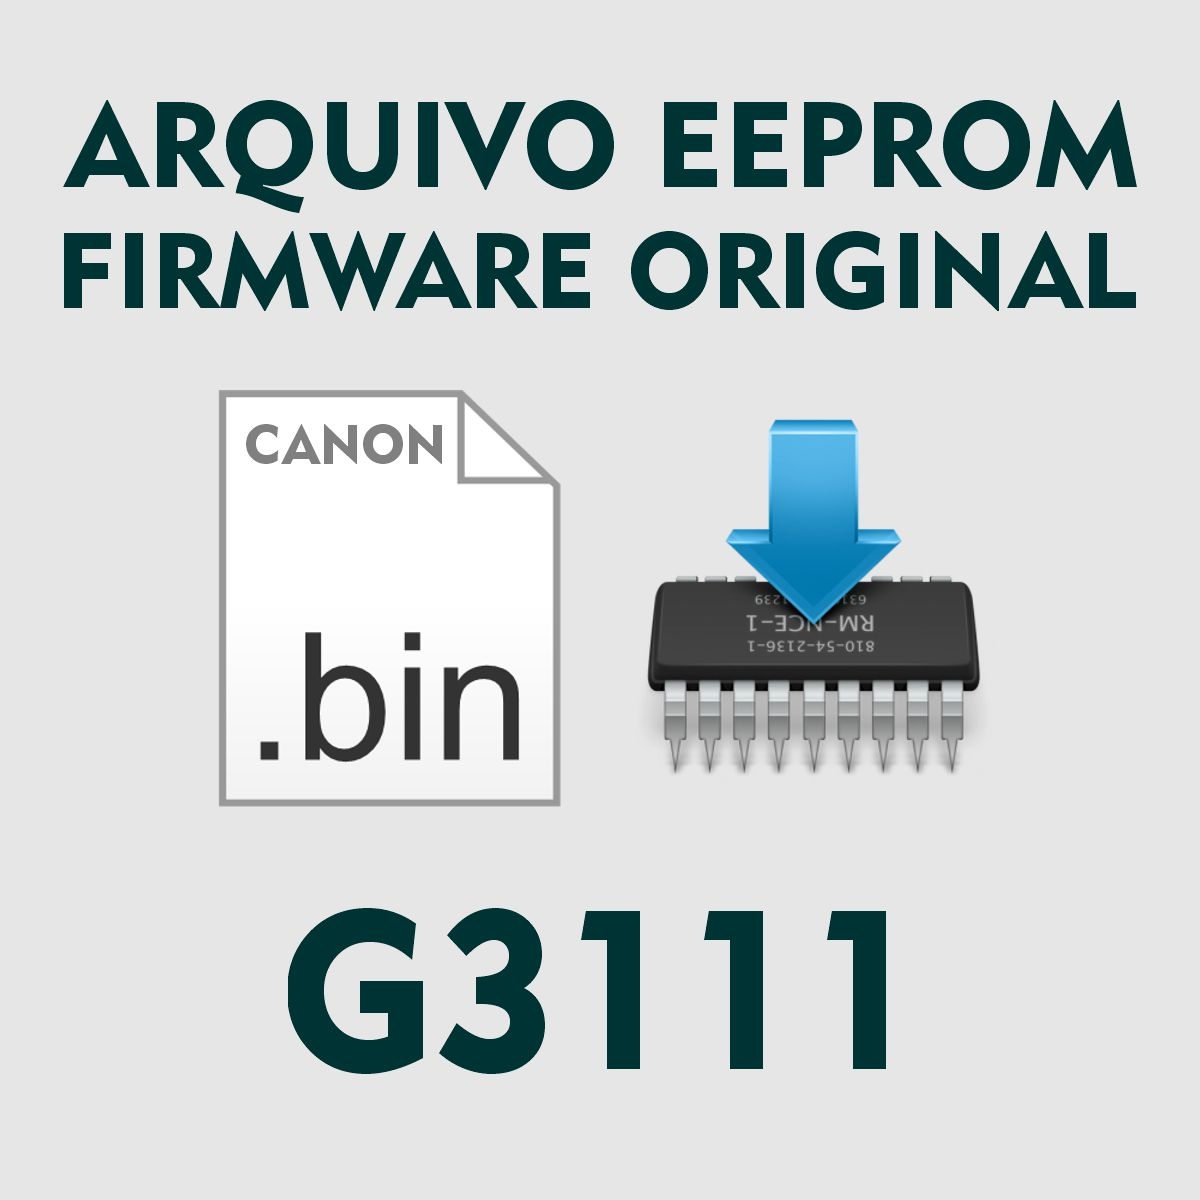 Canon G3111 | Arquivo de Eeprom Firmware .bin - Original